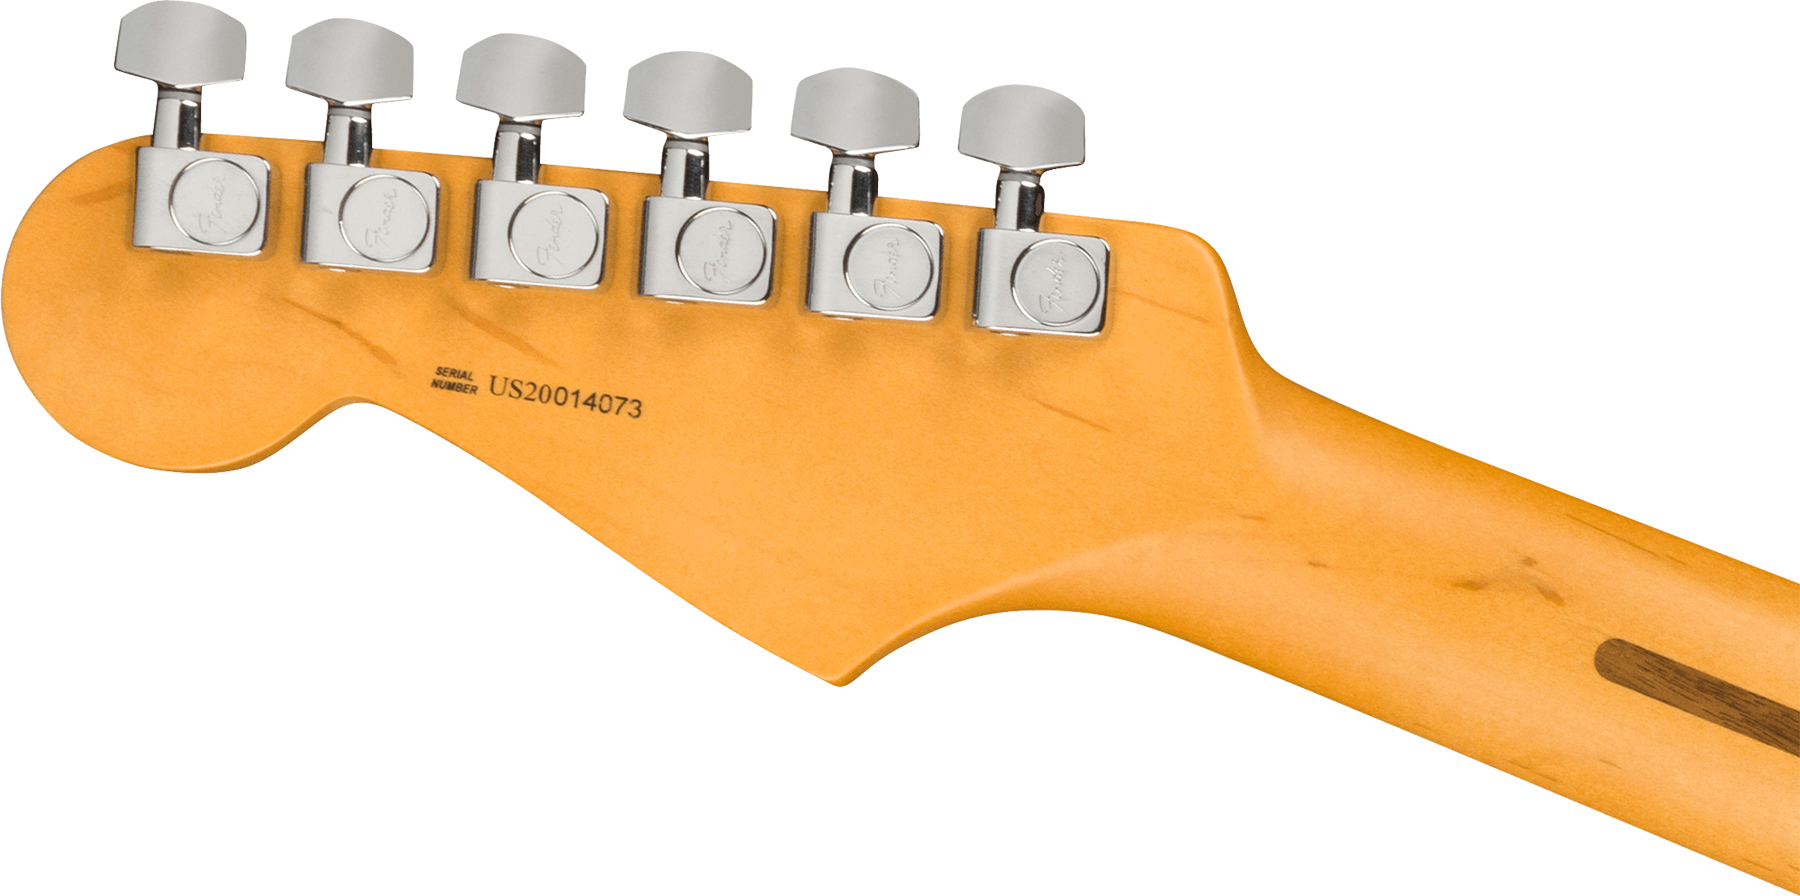 Fender Strat American Professional Ii Usa Rw - Roasted Pine - E-Gitarre in Str-Form - Variation 3